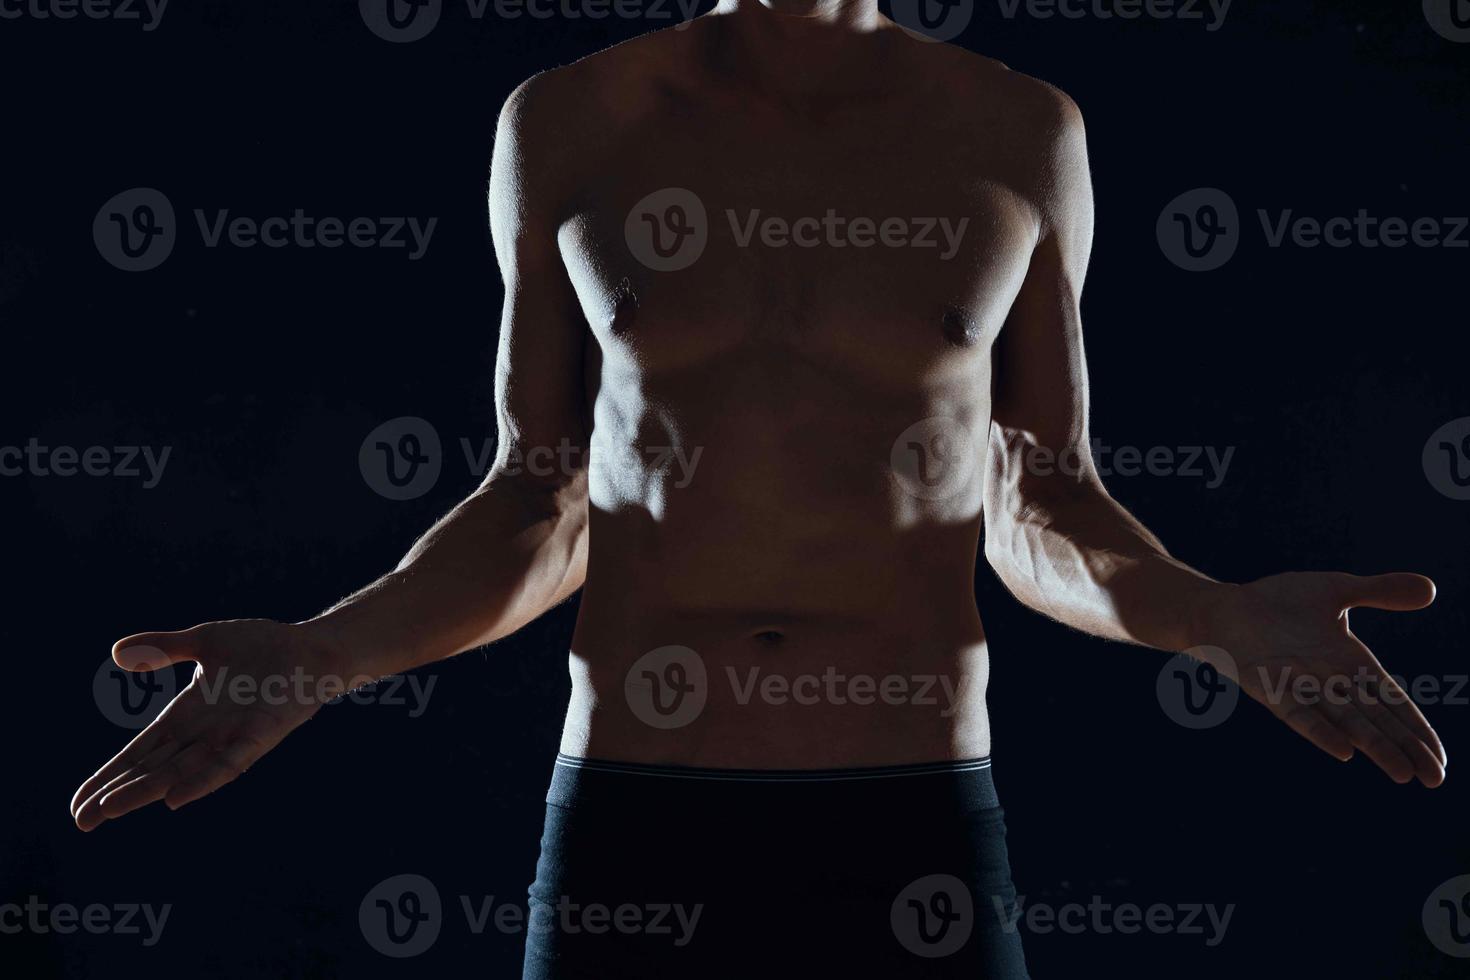 Deportes hombre con bombeado arriba abdominales rutina de ejercicio motivación oscuro antecedentes foto